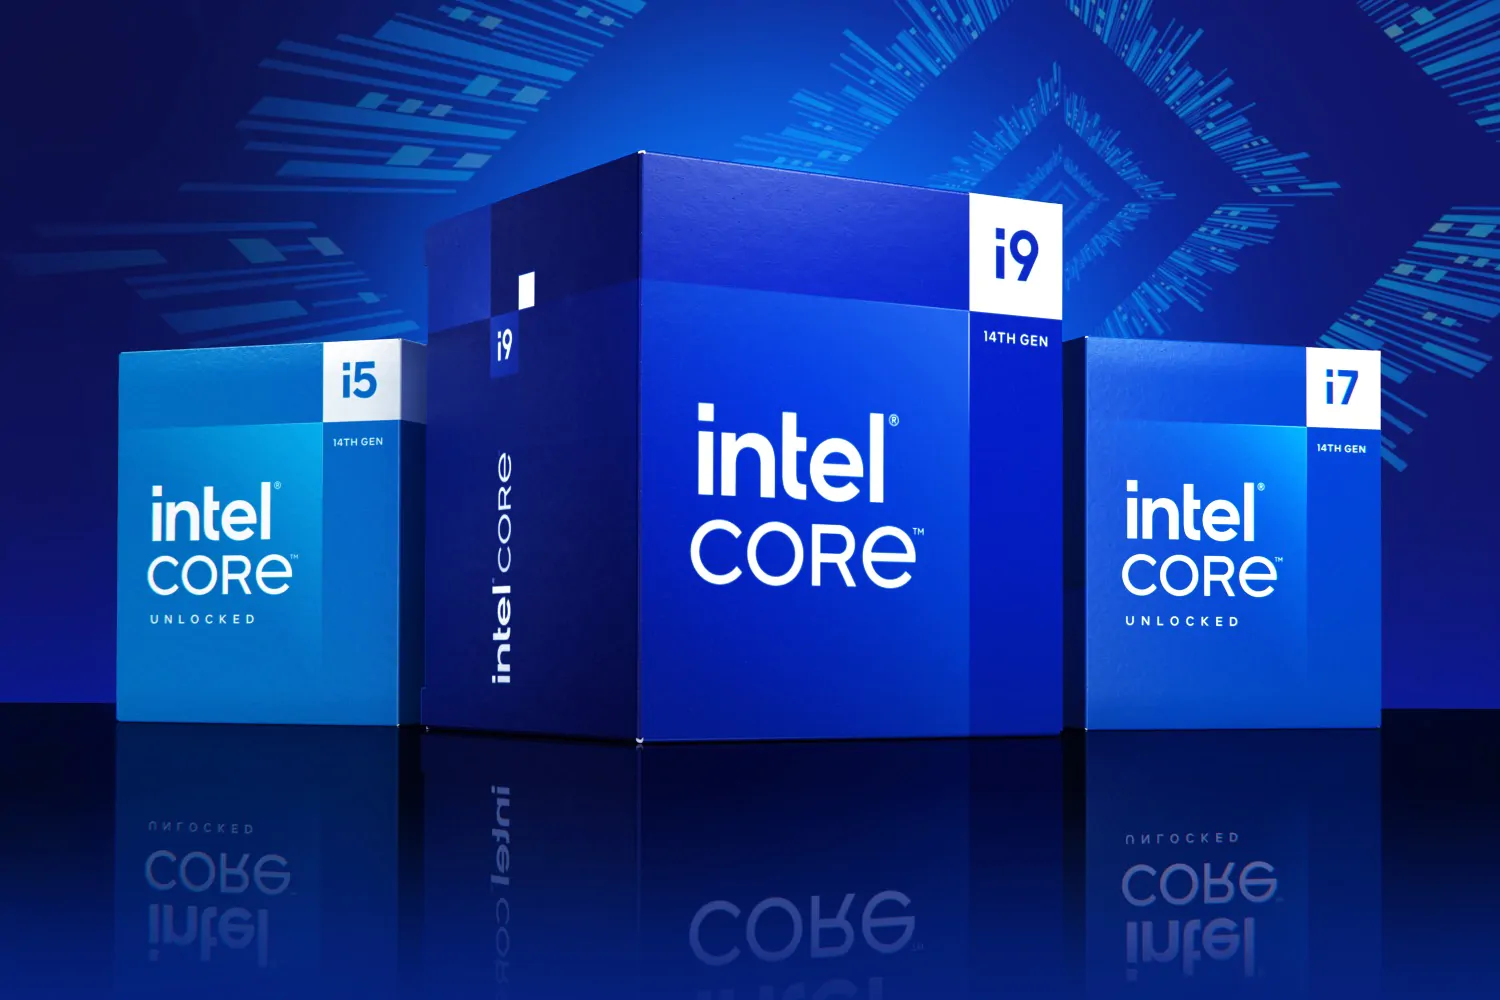 Intel introduces the new 14th generation Intel Core desktop processors